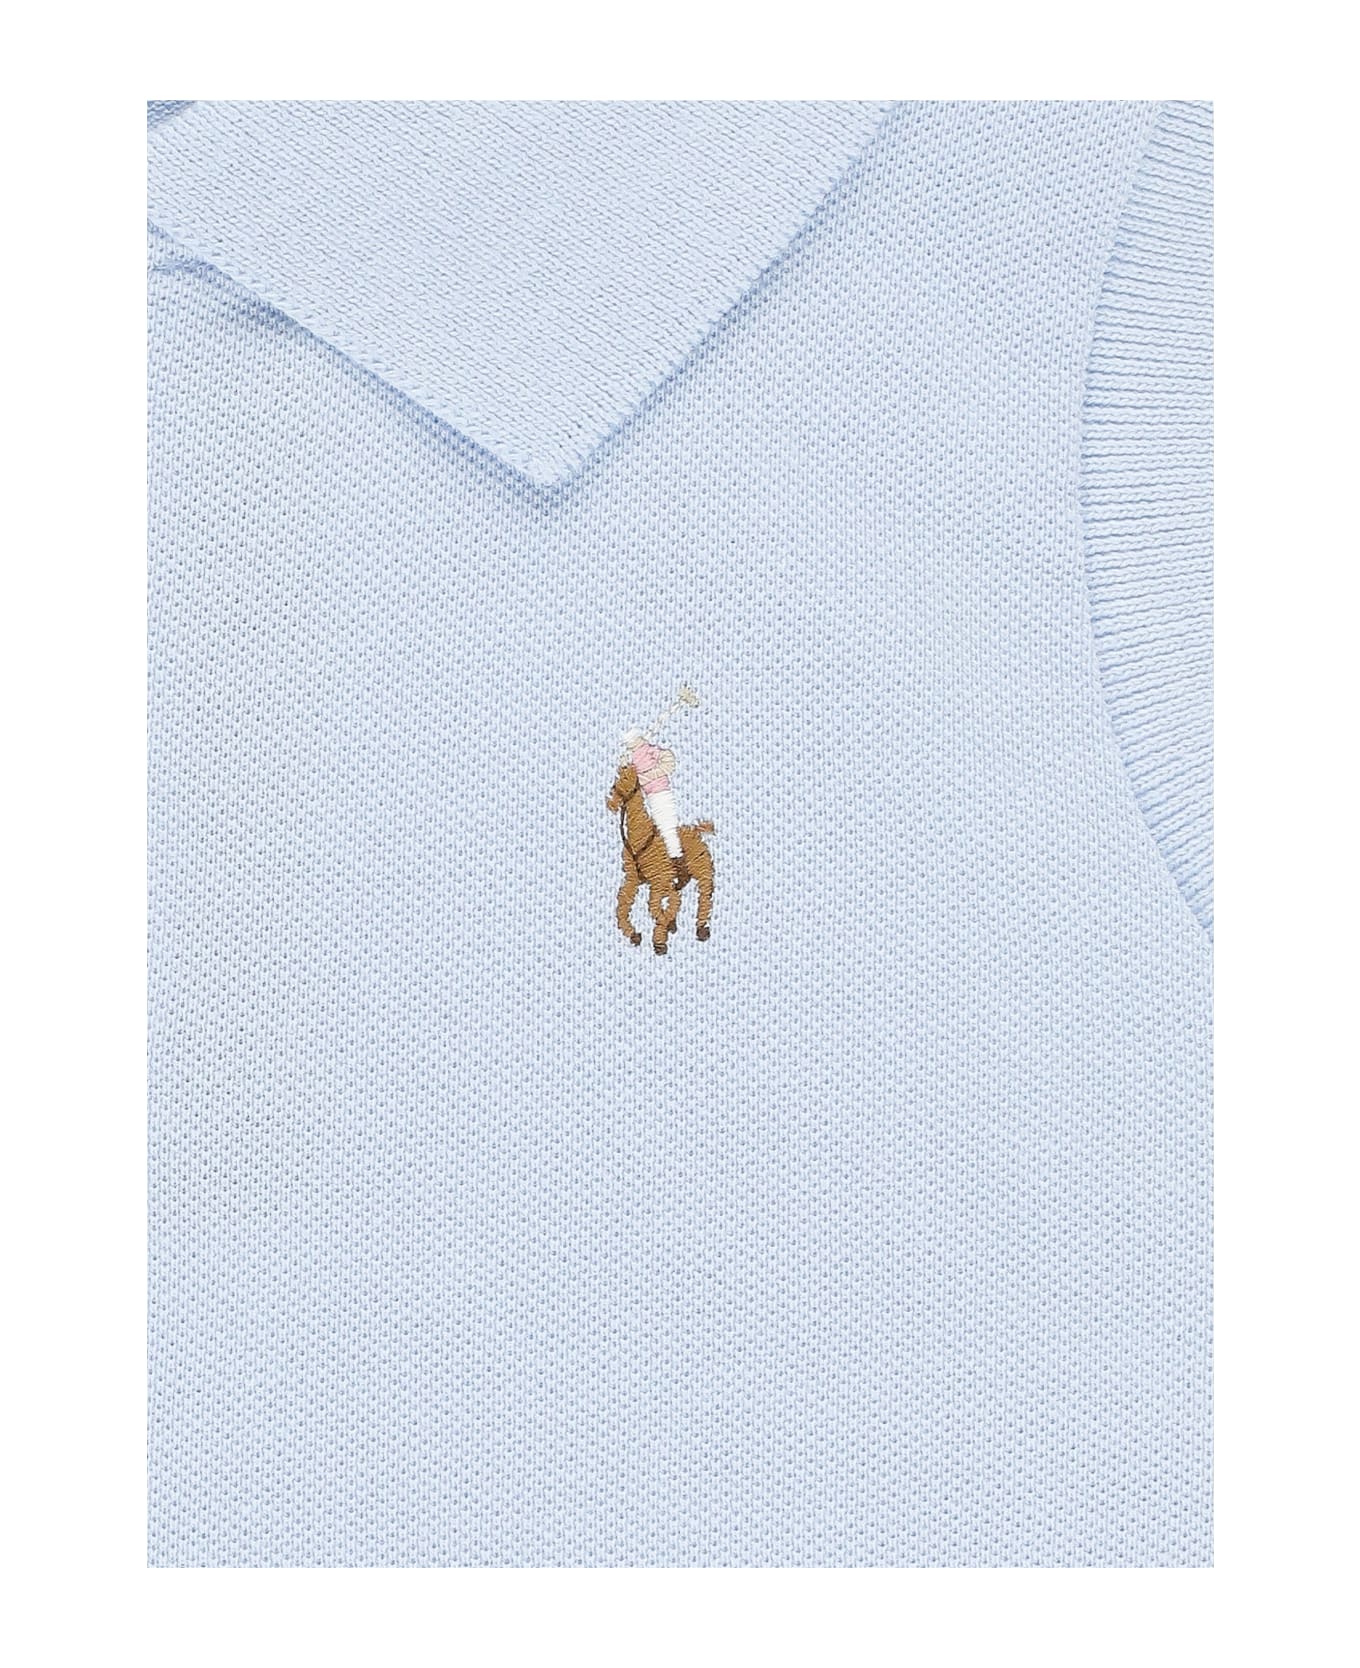 Ralph Lauren Pony Polo Shirt - Light Blue Tシャツ＆ポロシャツ